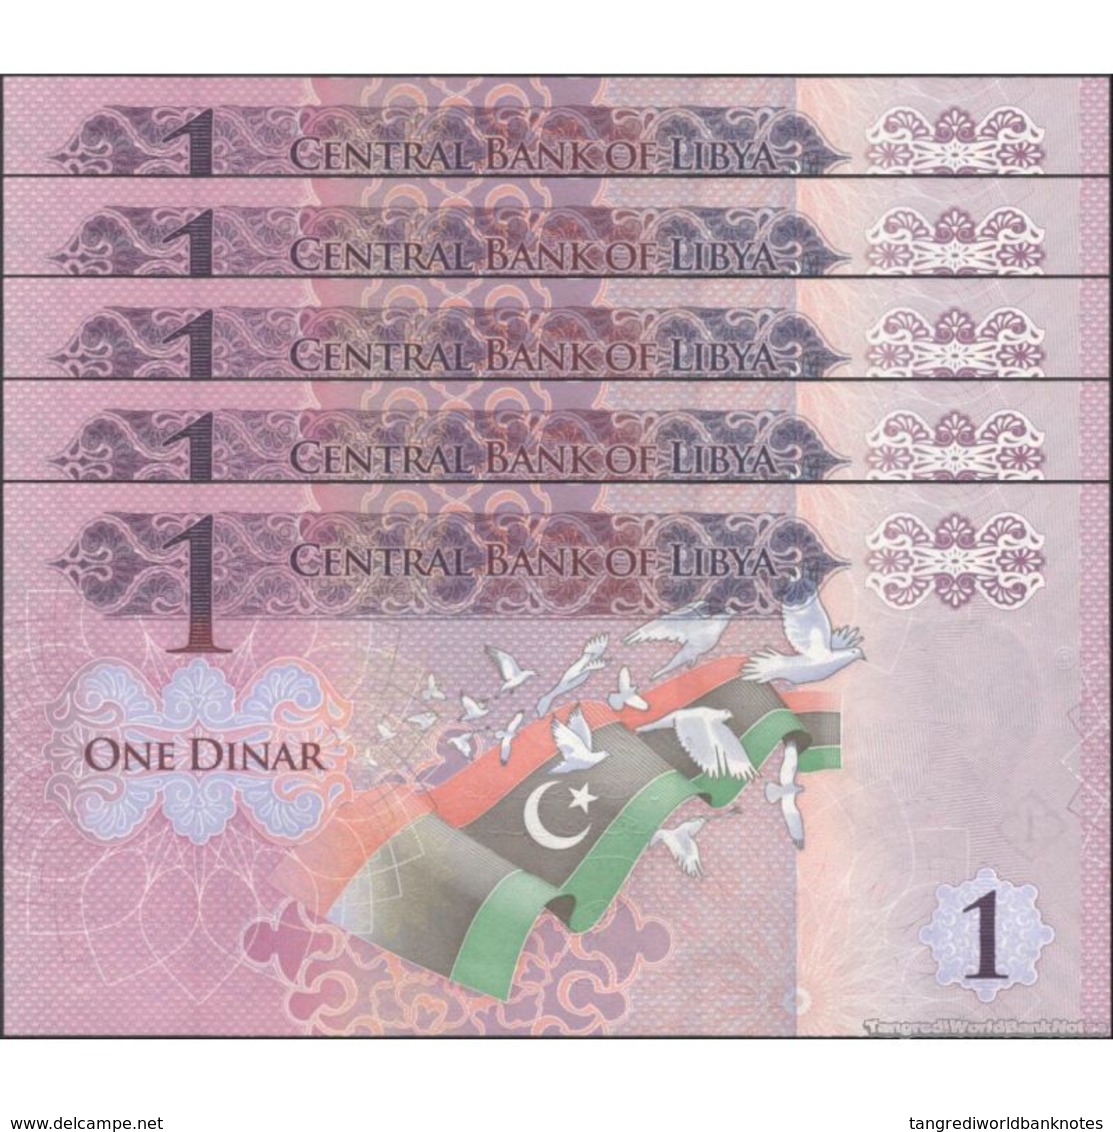 TWN - LIBYA 76 - 1 Dinar 2013 DEALERS LOT X 5 - Series 1 - Various Prefixes UNC - Libya